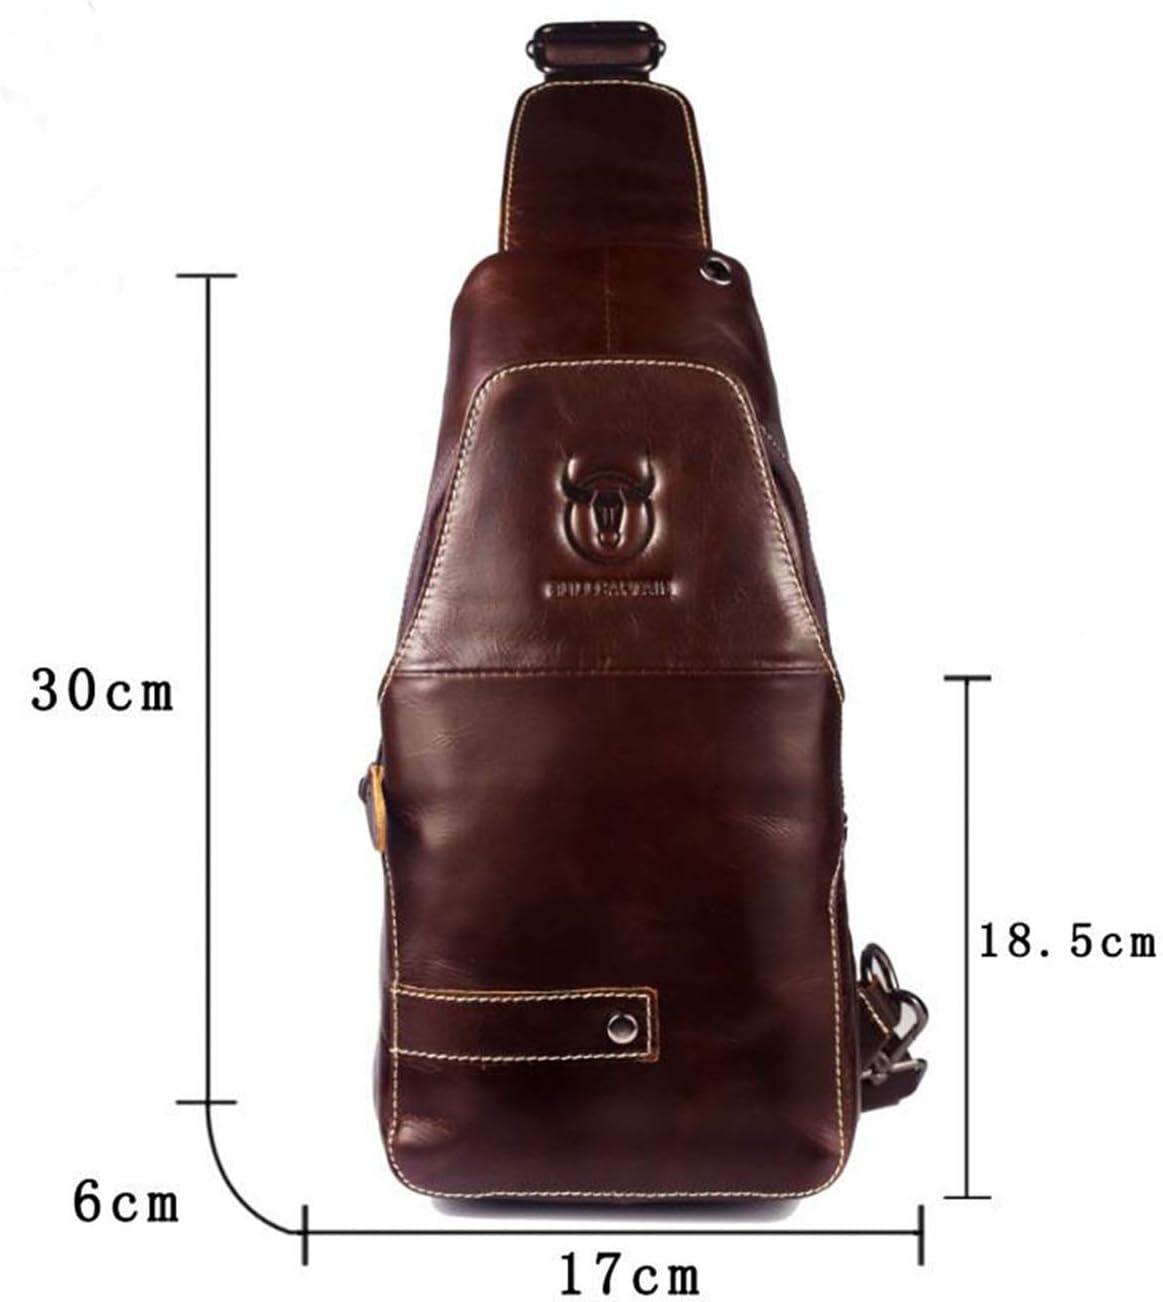 FR Fashion Co. 11" Men's Leather Business Crossbody Sling Bag - FR Fashion Co. 